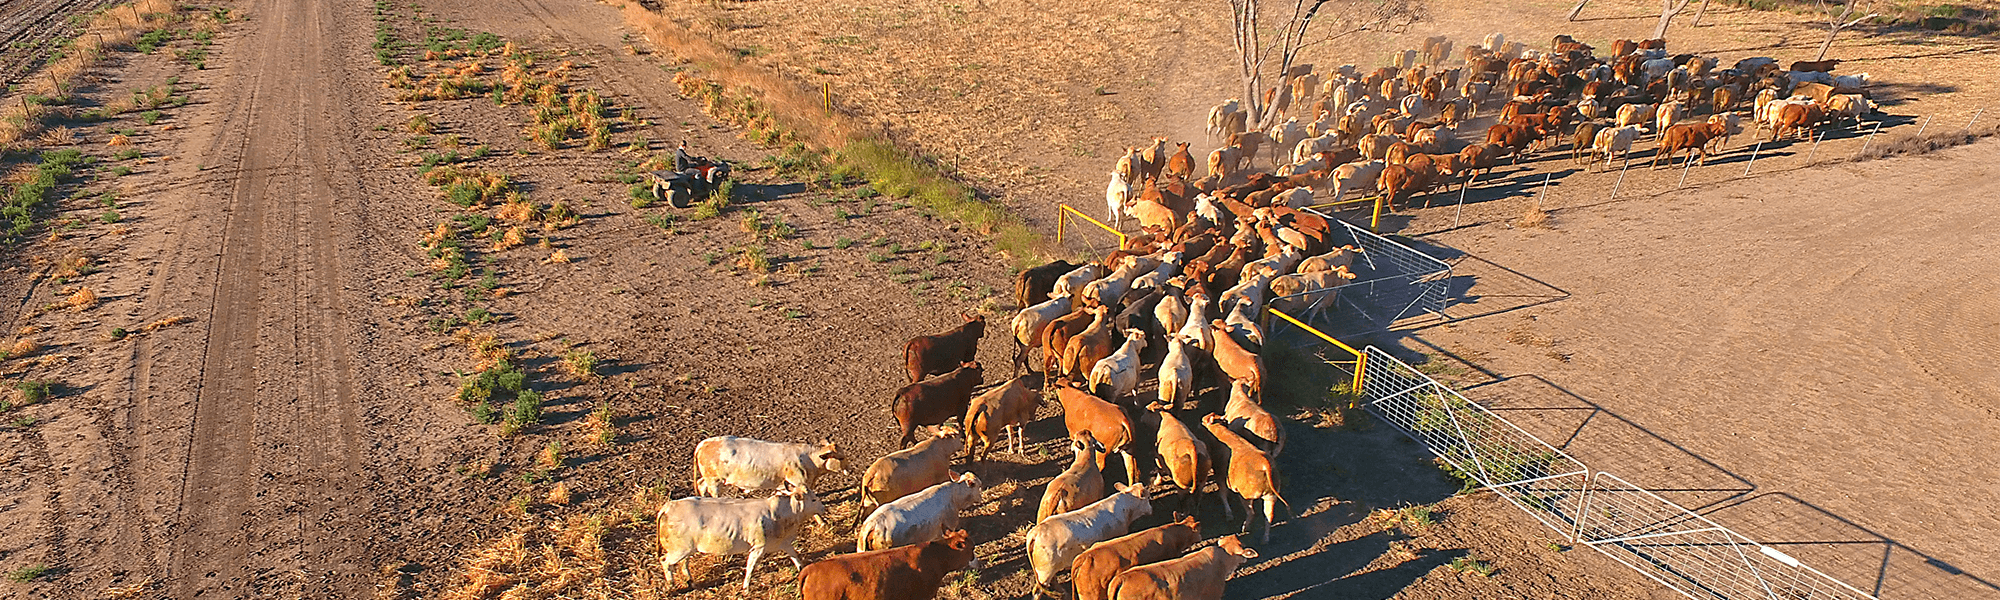 Farm hand herding cattle in Mt Isa